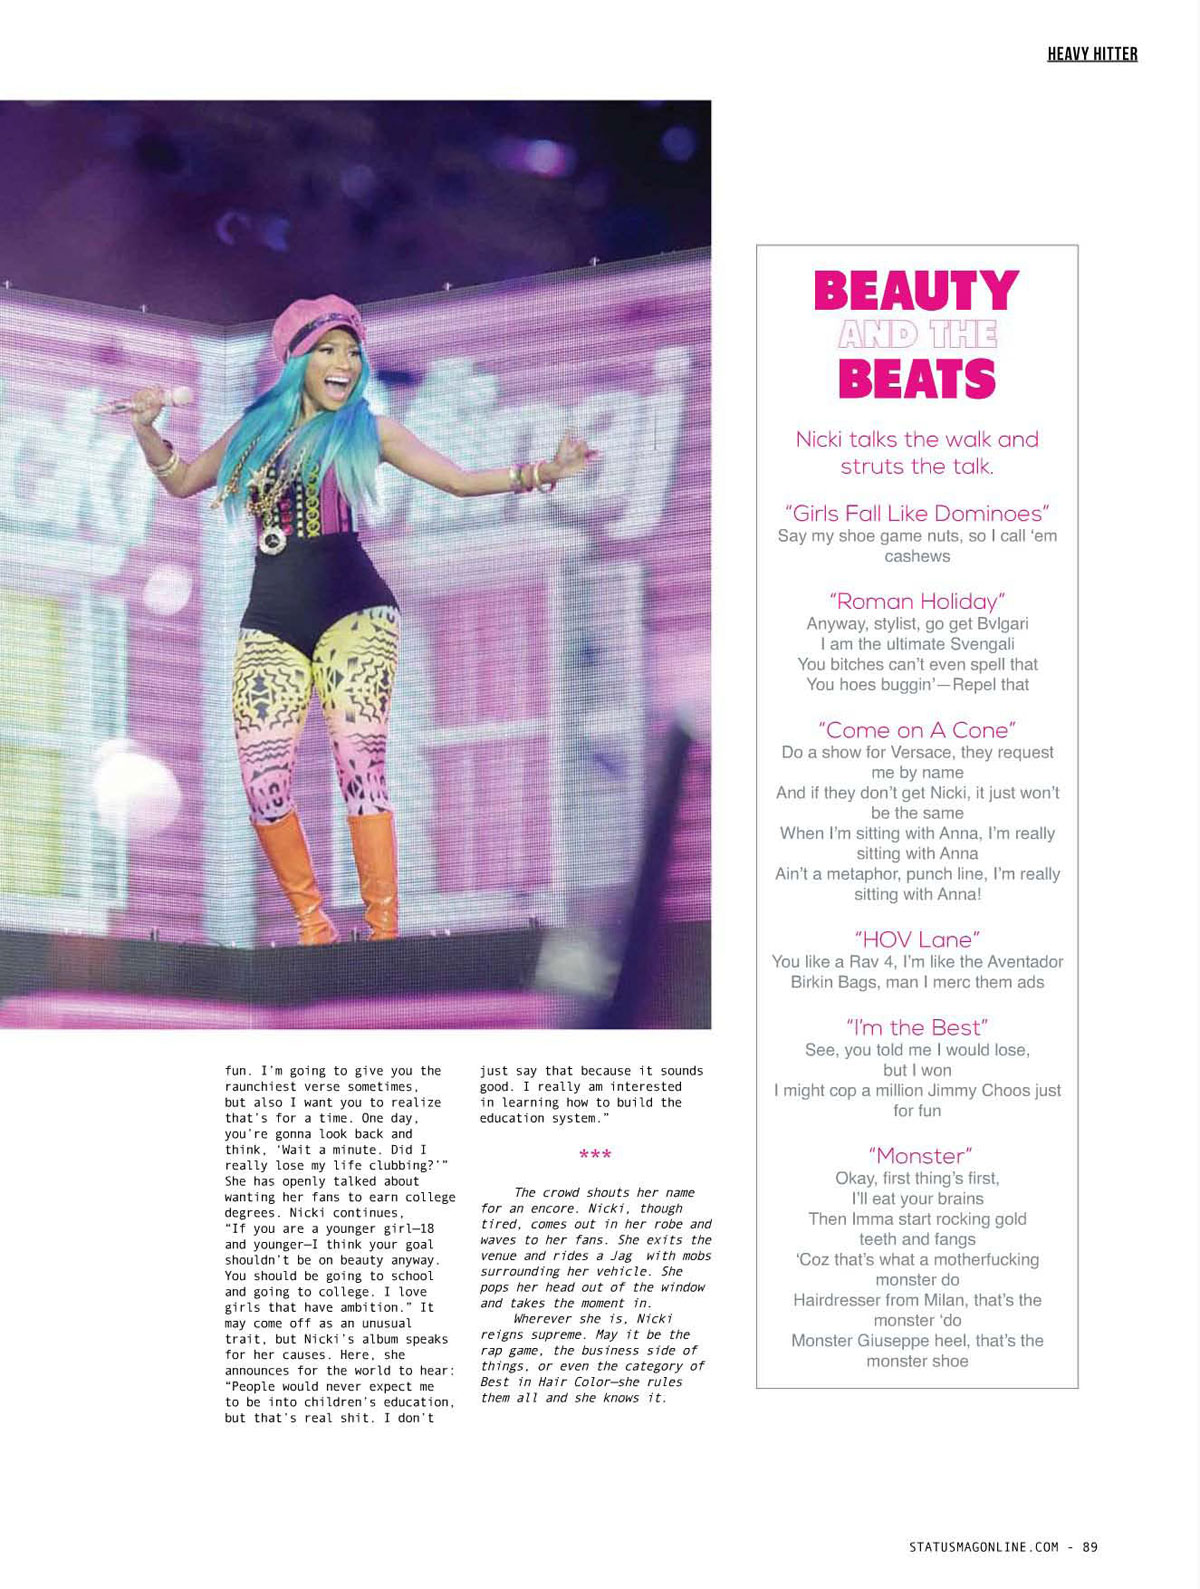 http://3.bp.blogspot.com/-plNHJIvAka4/UEznY7DnFmI/AAAAAAAA9is/H7E228DK_Kk/s1600/Nicki-Minaj-hot-magazine.jpg